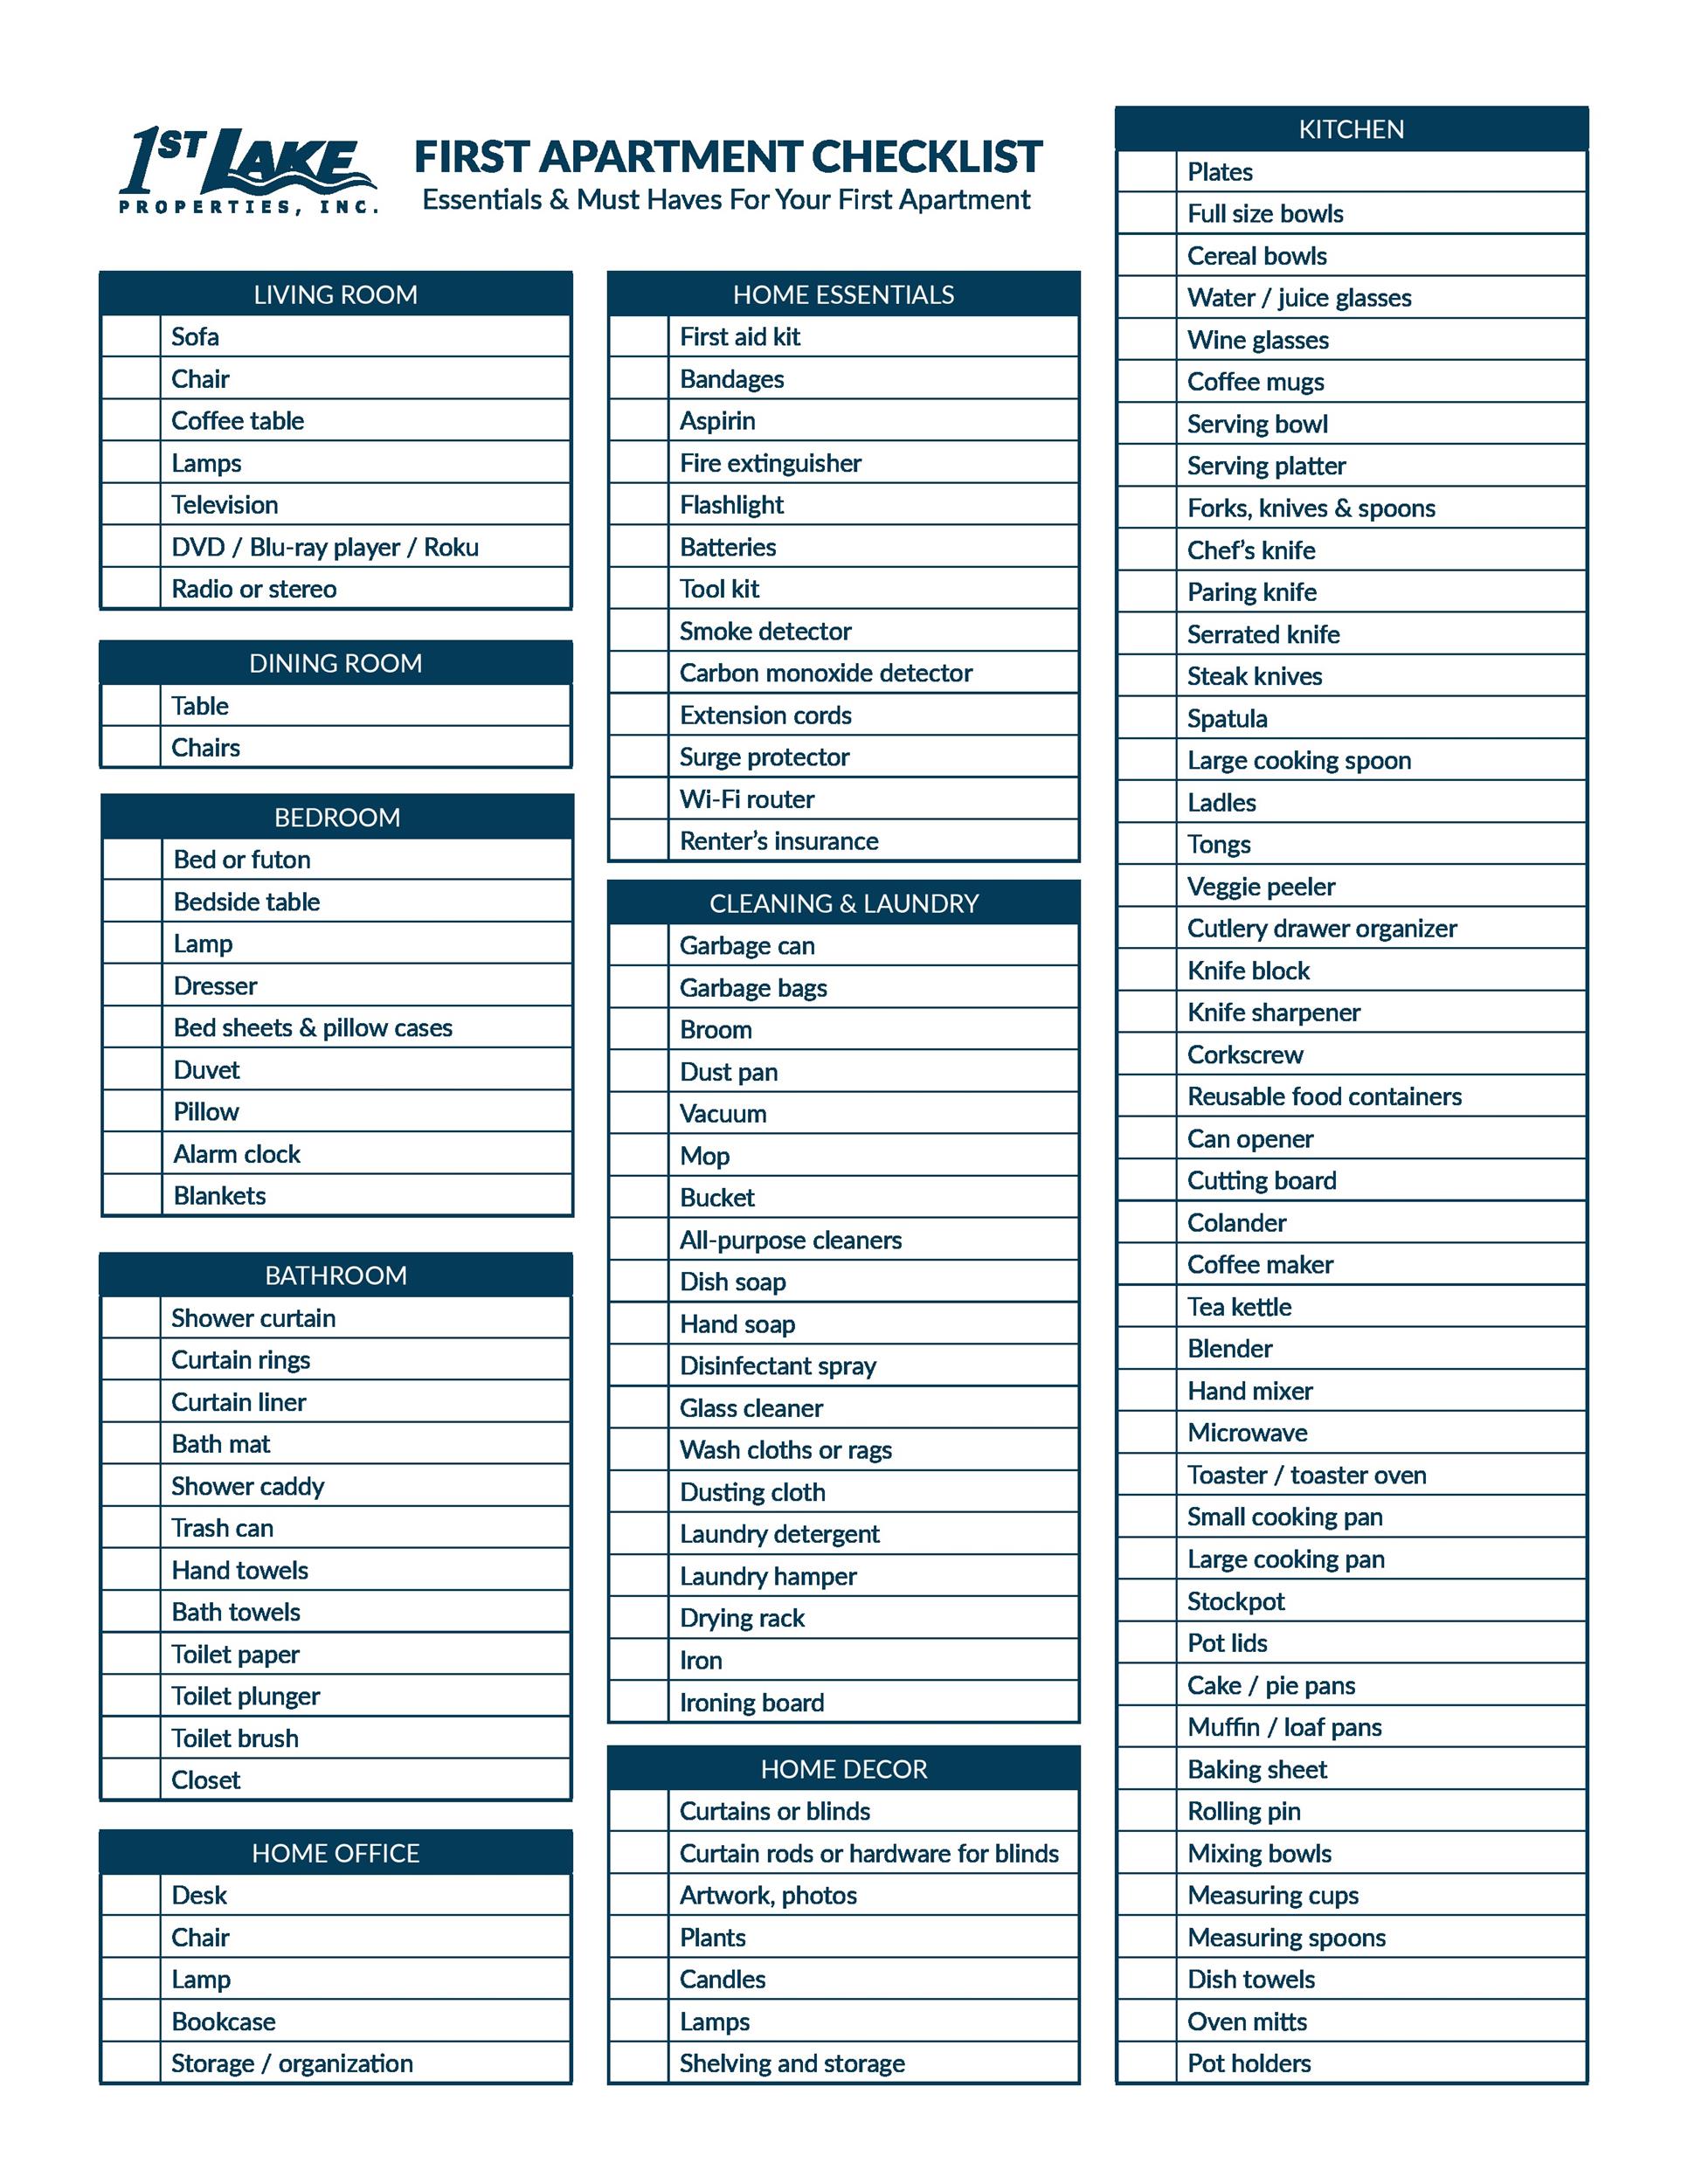 Free apartment checklist 34